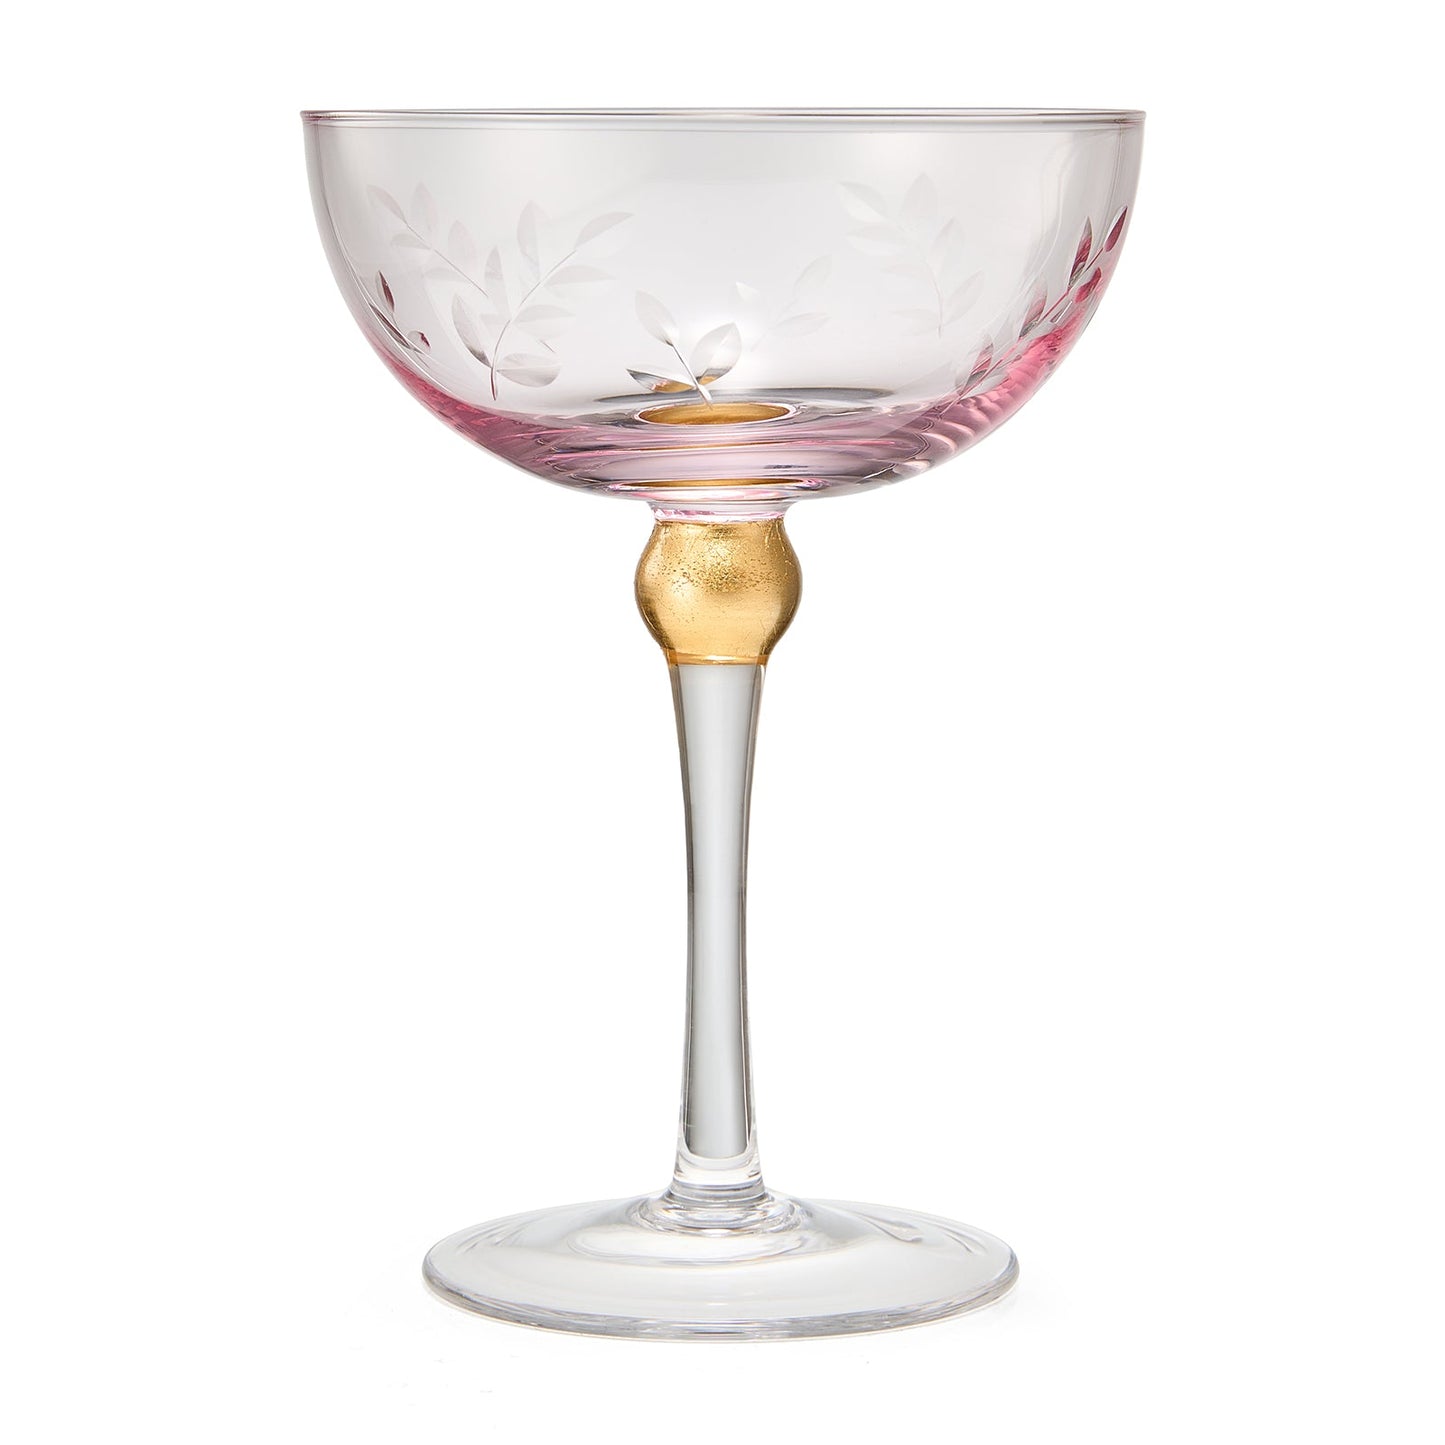 Giglio Coupe Cocktail Glassware, Set of 4